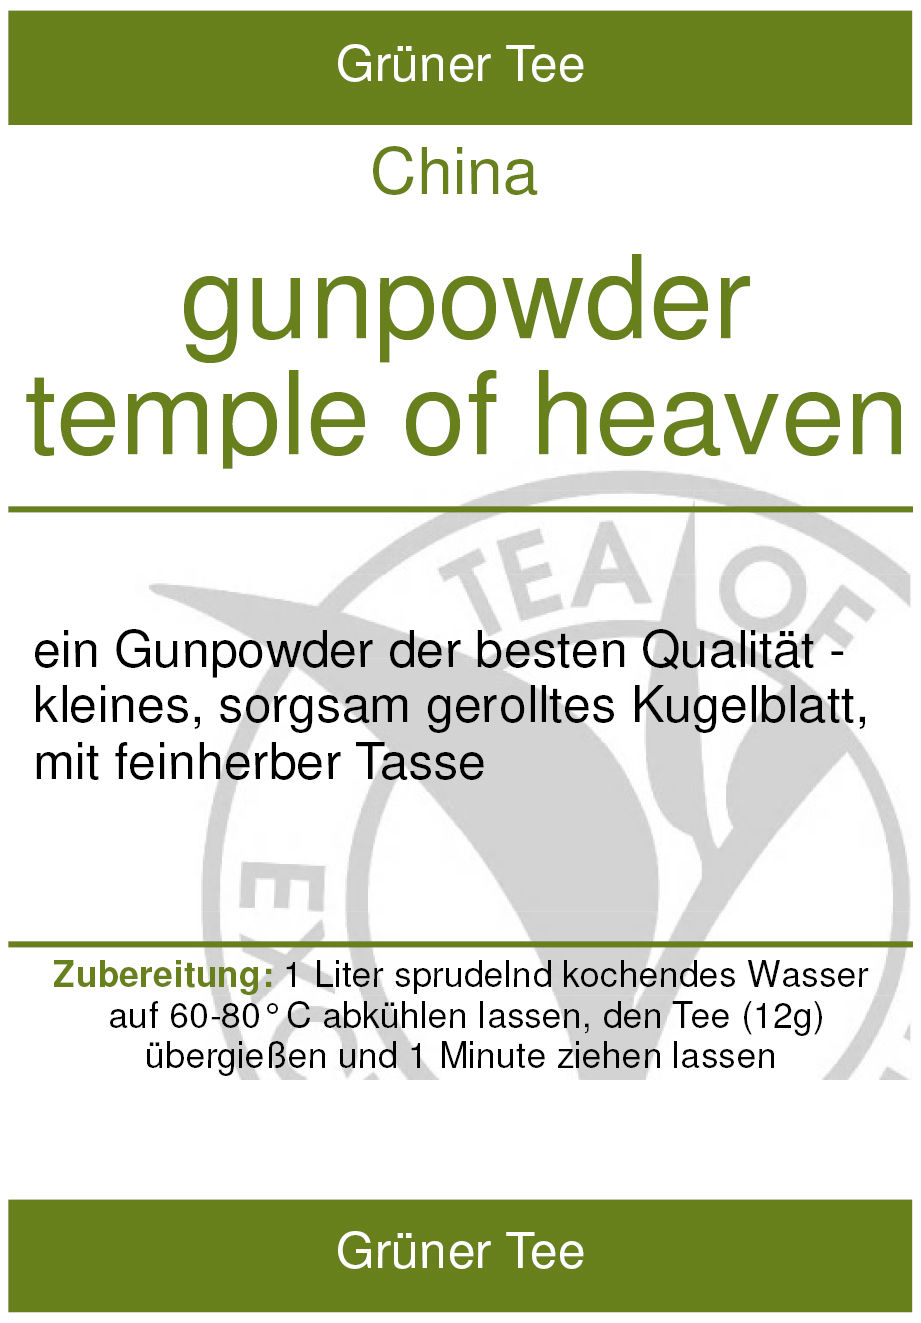 gunpowder temple of heaven